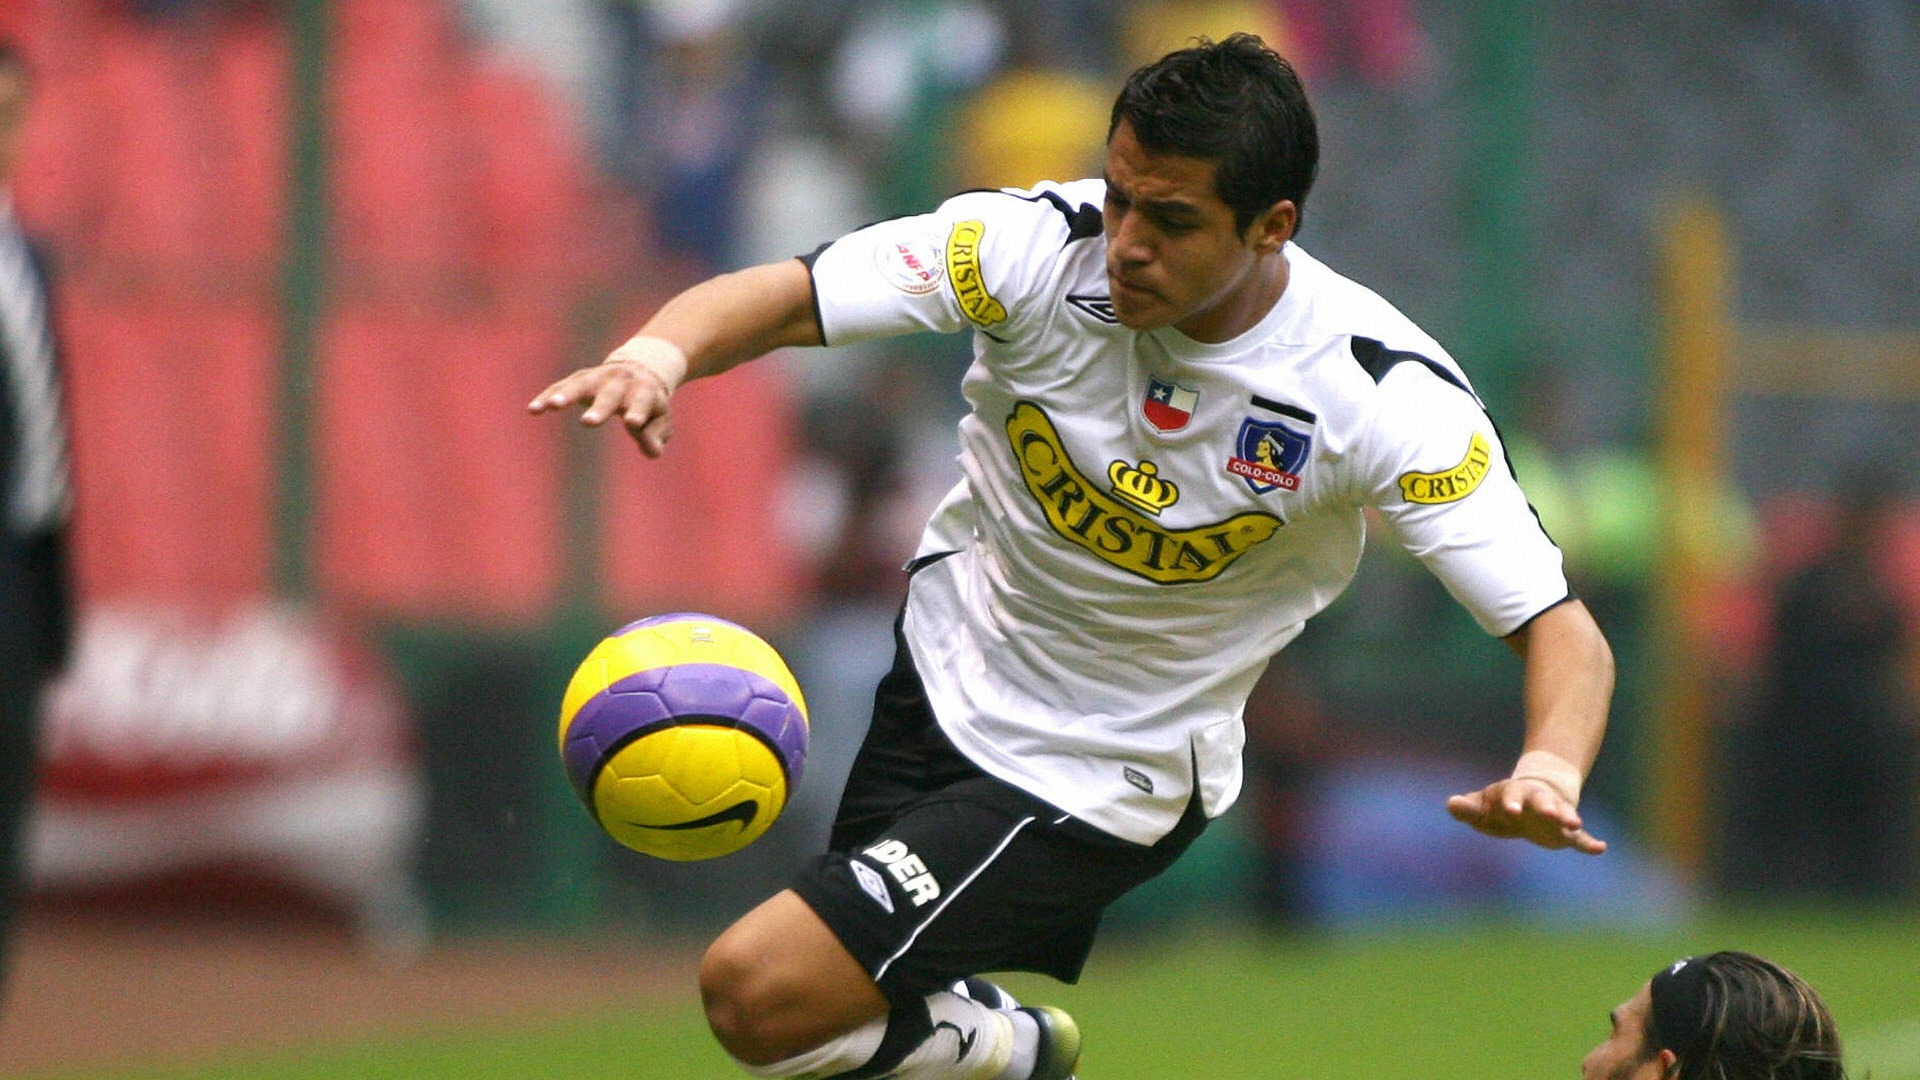 Alexis Sanchez Colo Colo 2007 1fdqhymf1lw1o18fzp254fjsjw